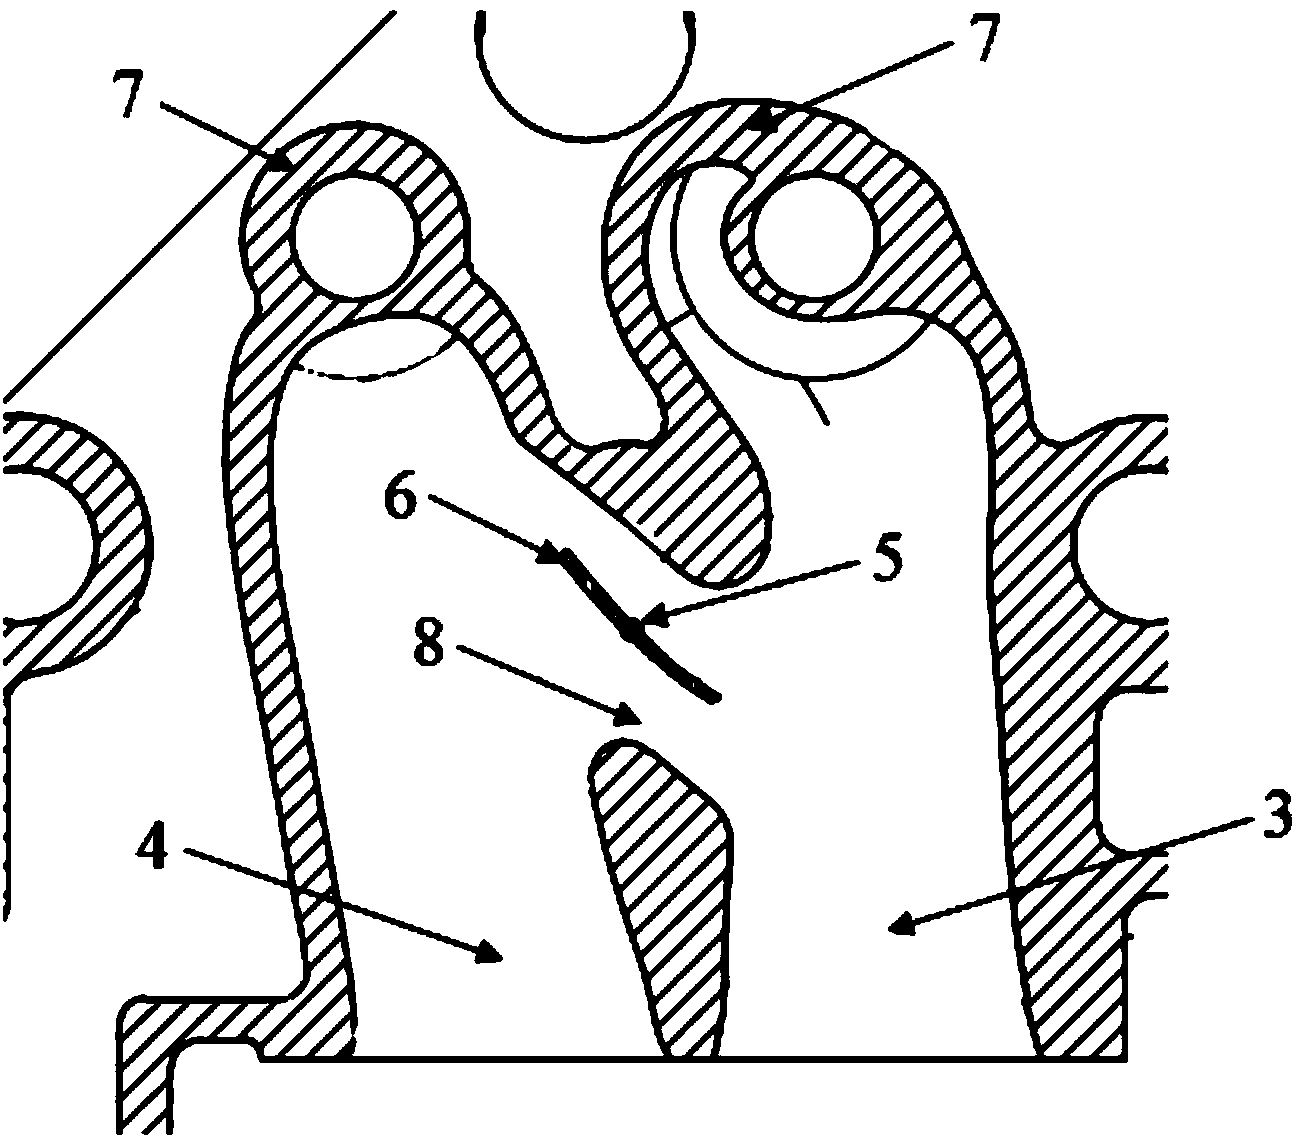 Variable-vortex air inlet passage of multi-valve engine